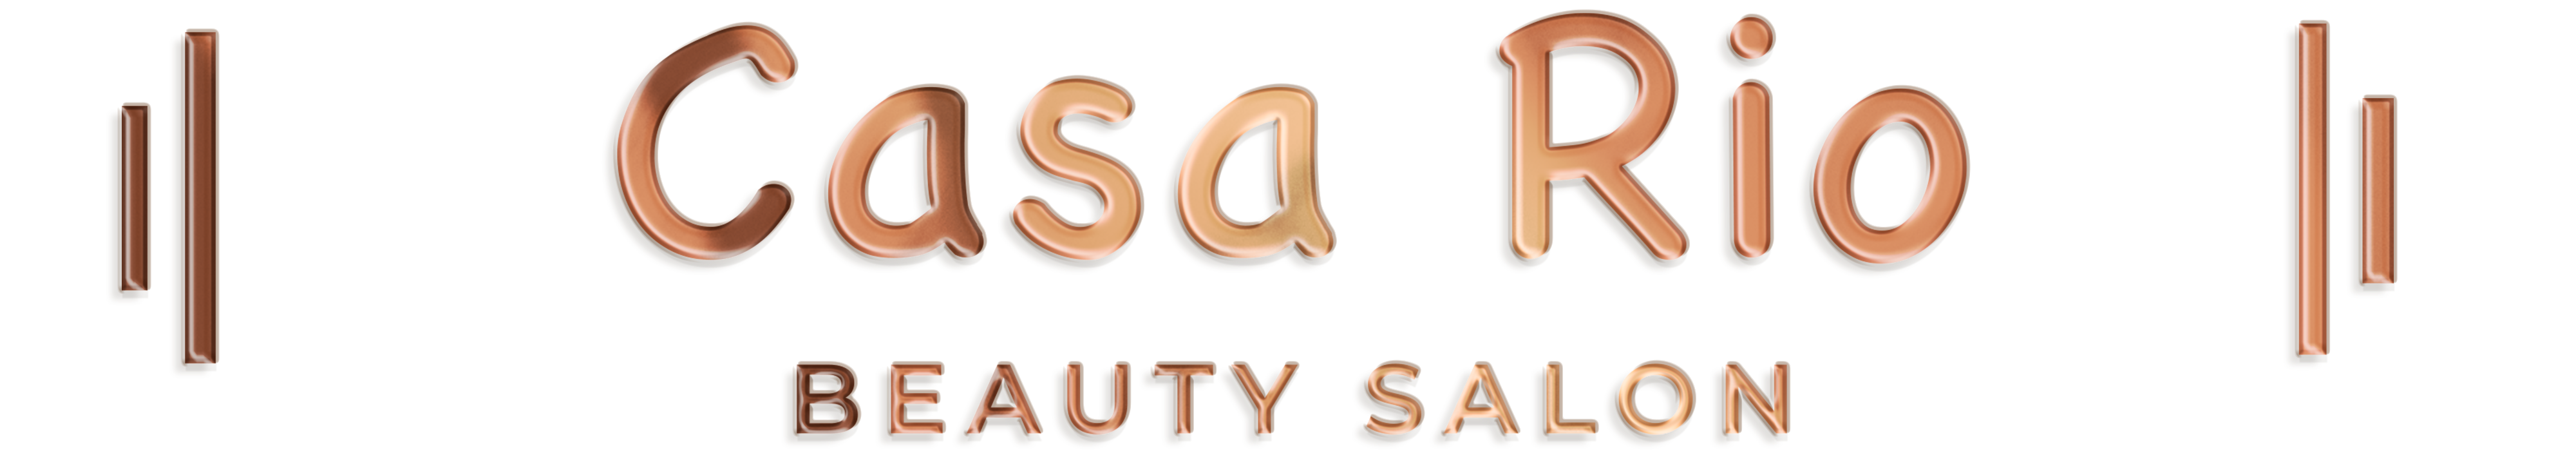 Casa Rio Beauty Salon